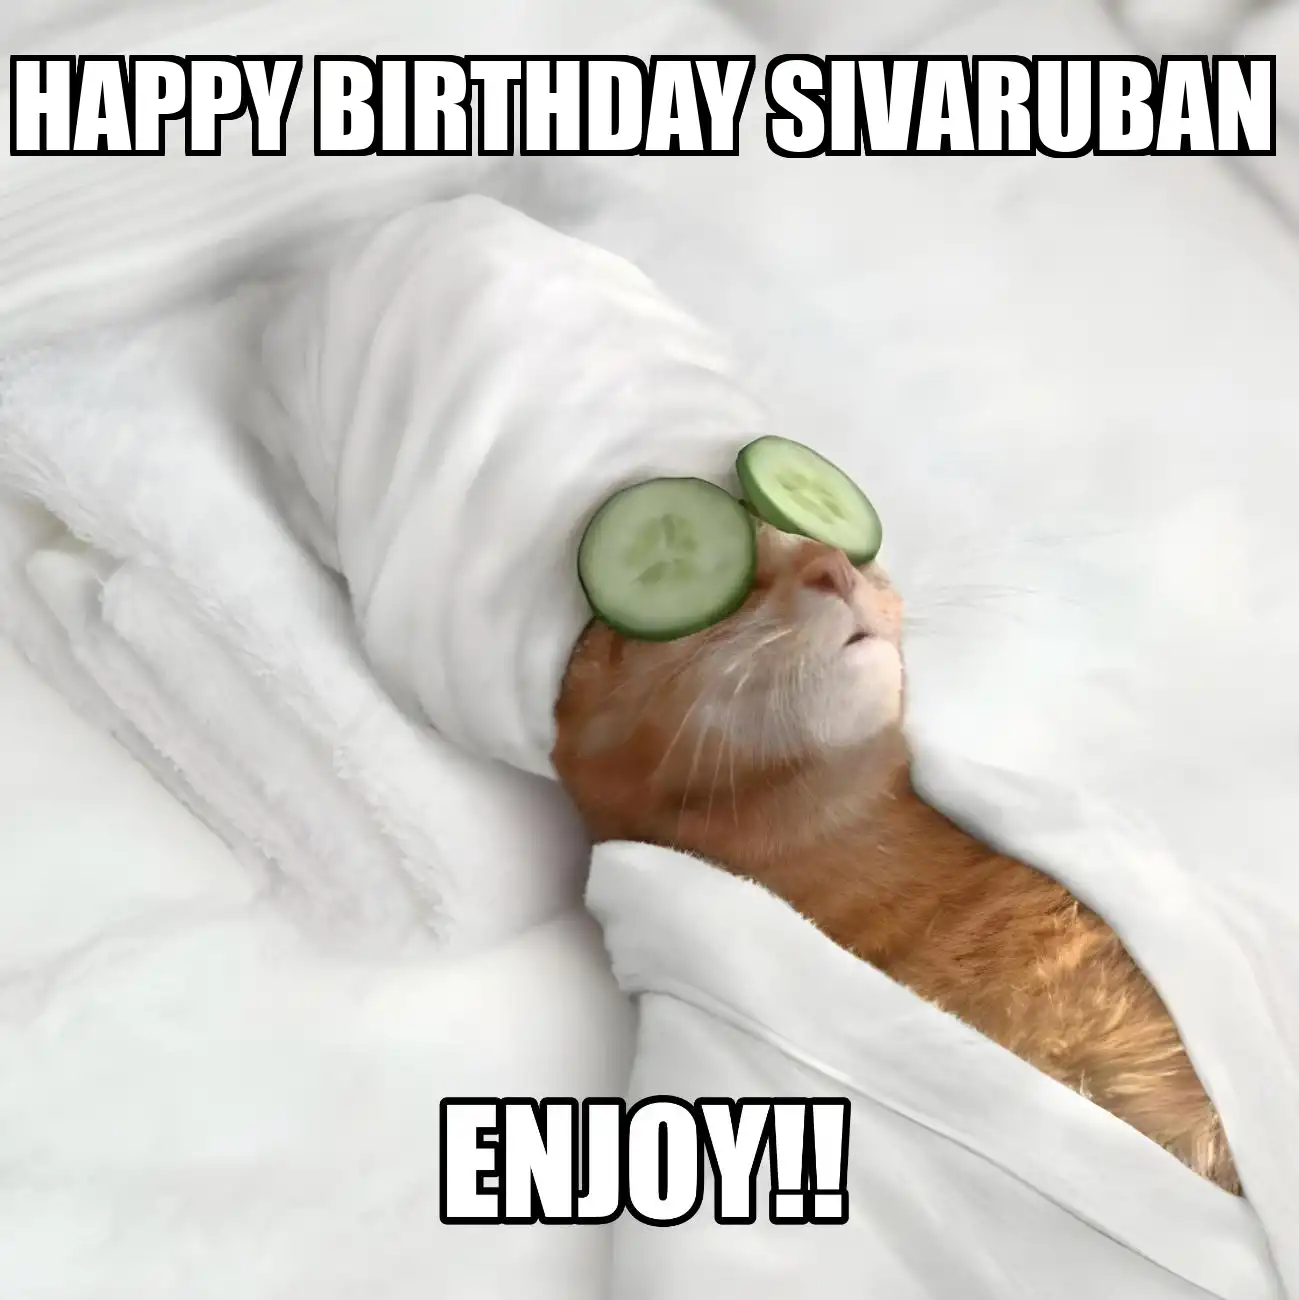 Happy Birthday Sivaruban Enjoy Cat Meme